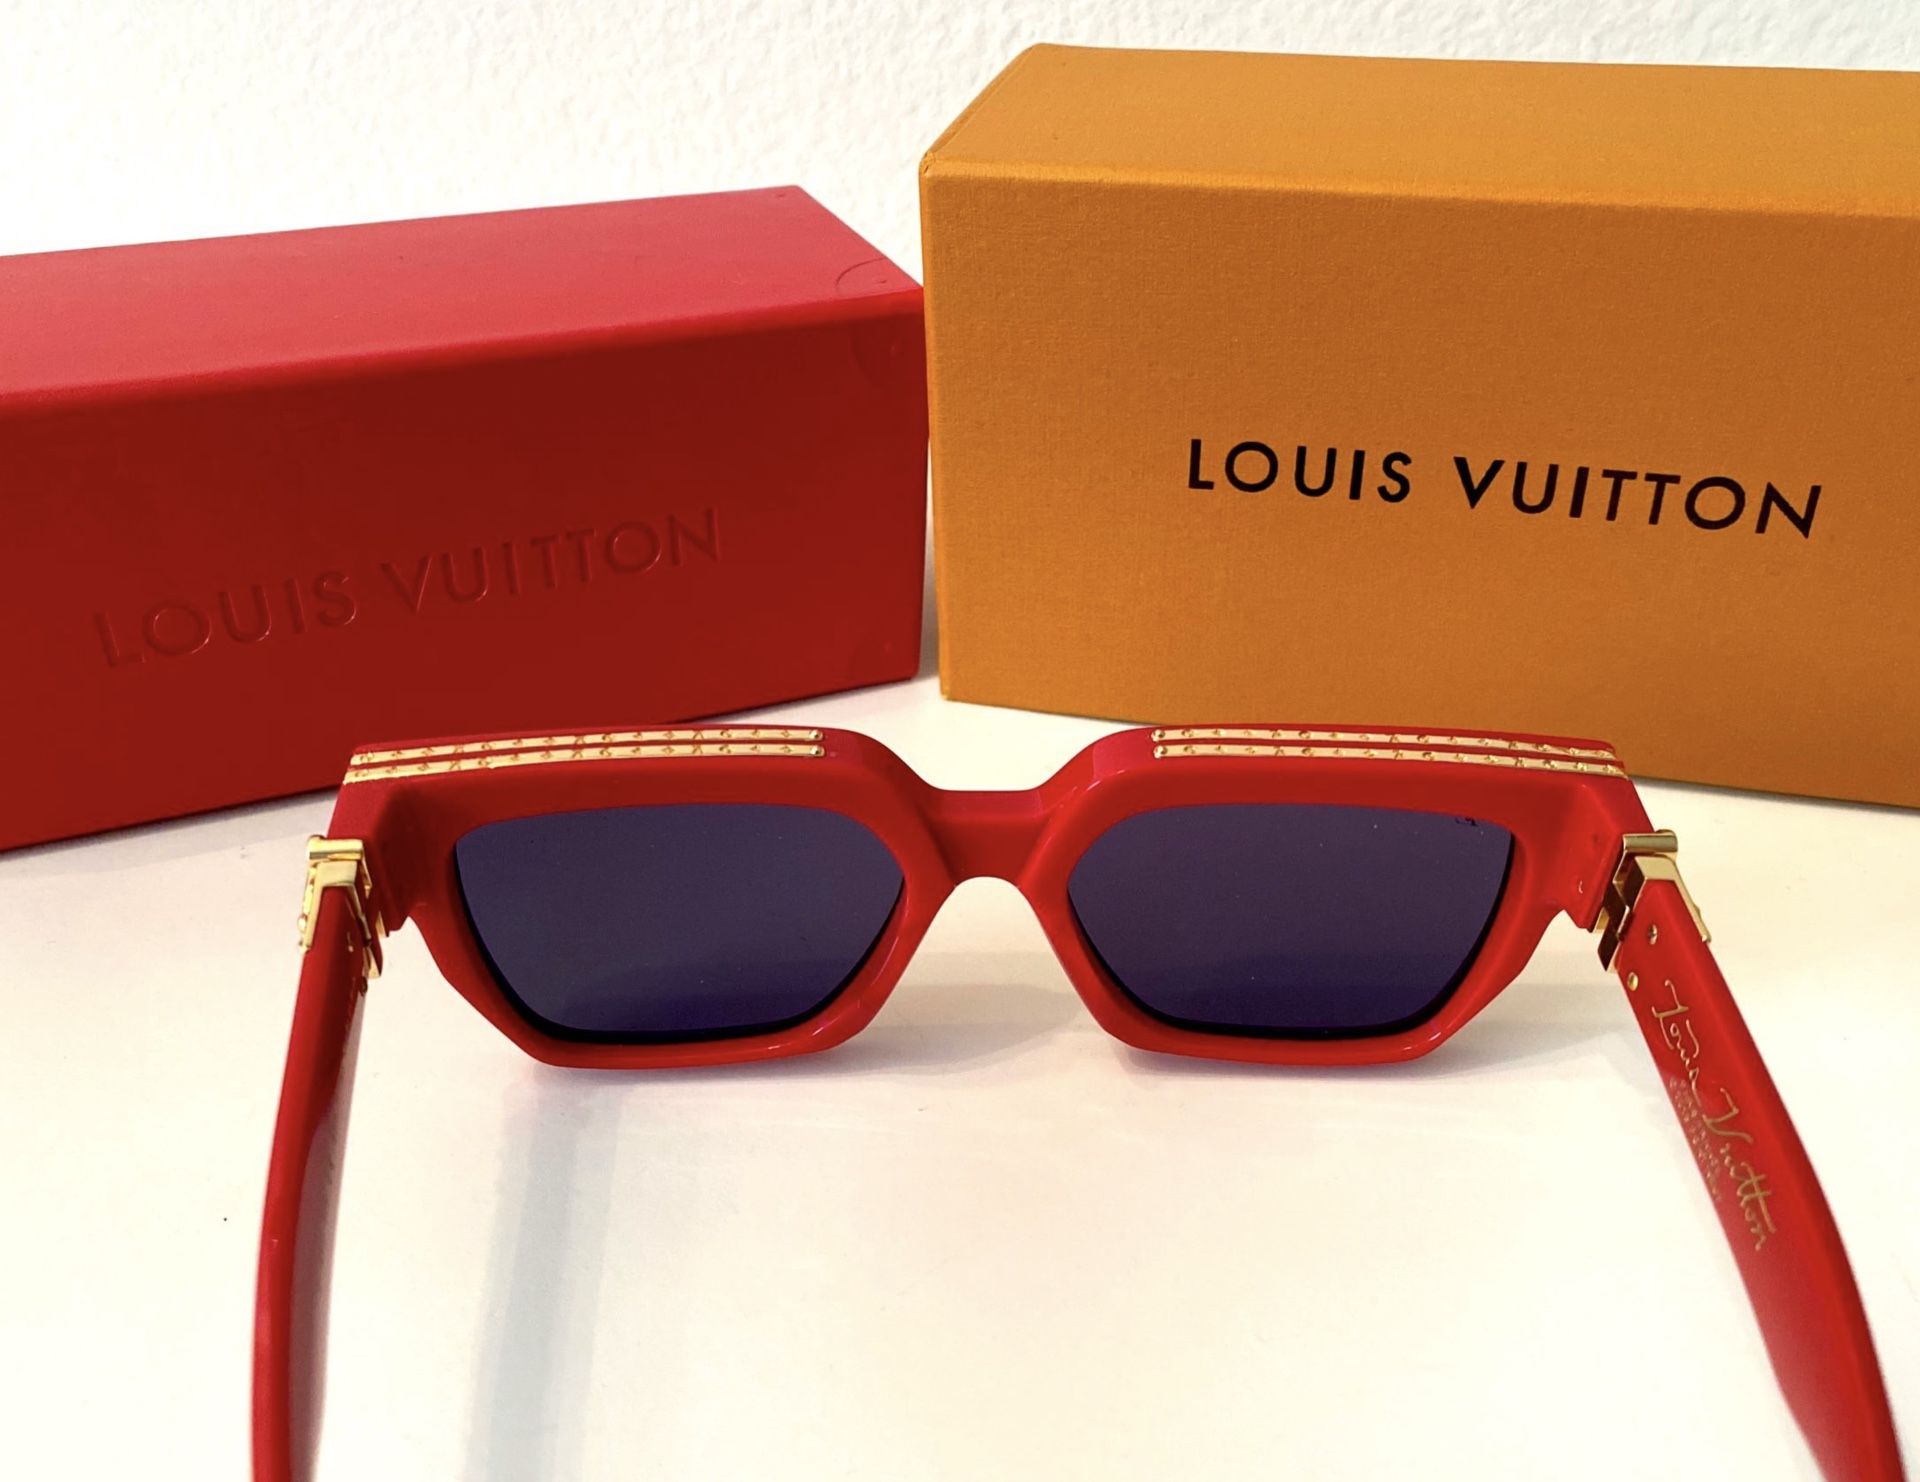 Louis Vuitton LA GRANDE BELLEZZA SUNGLASSES for Sale in Chandler, AZ -  OfferUp